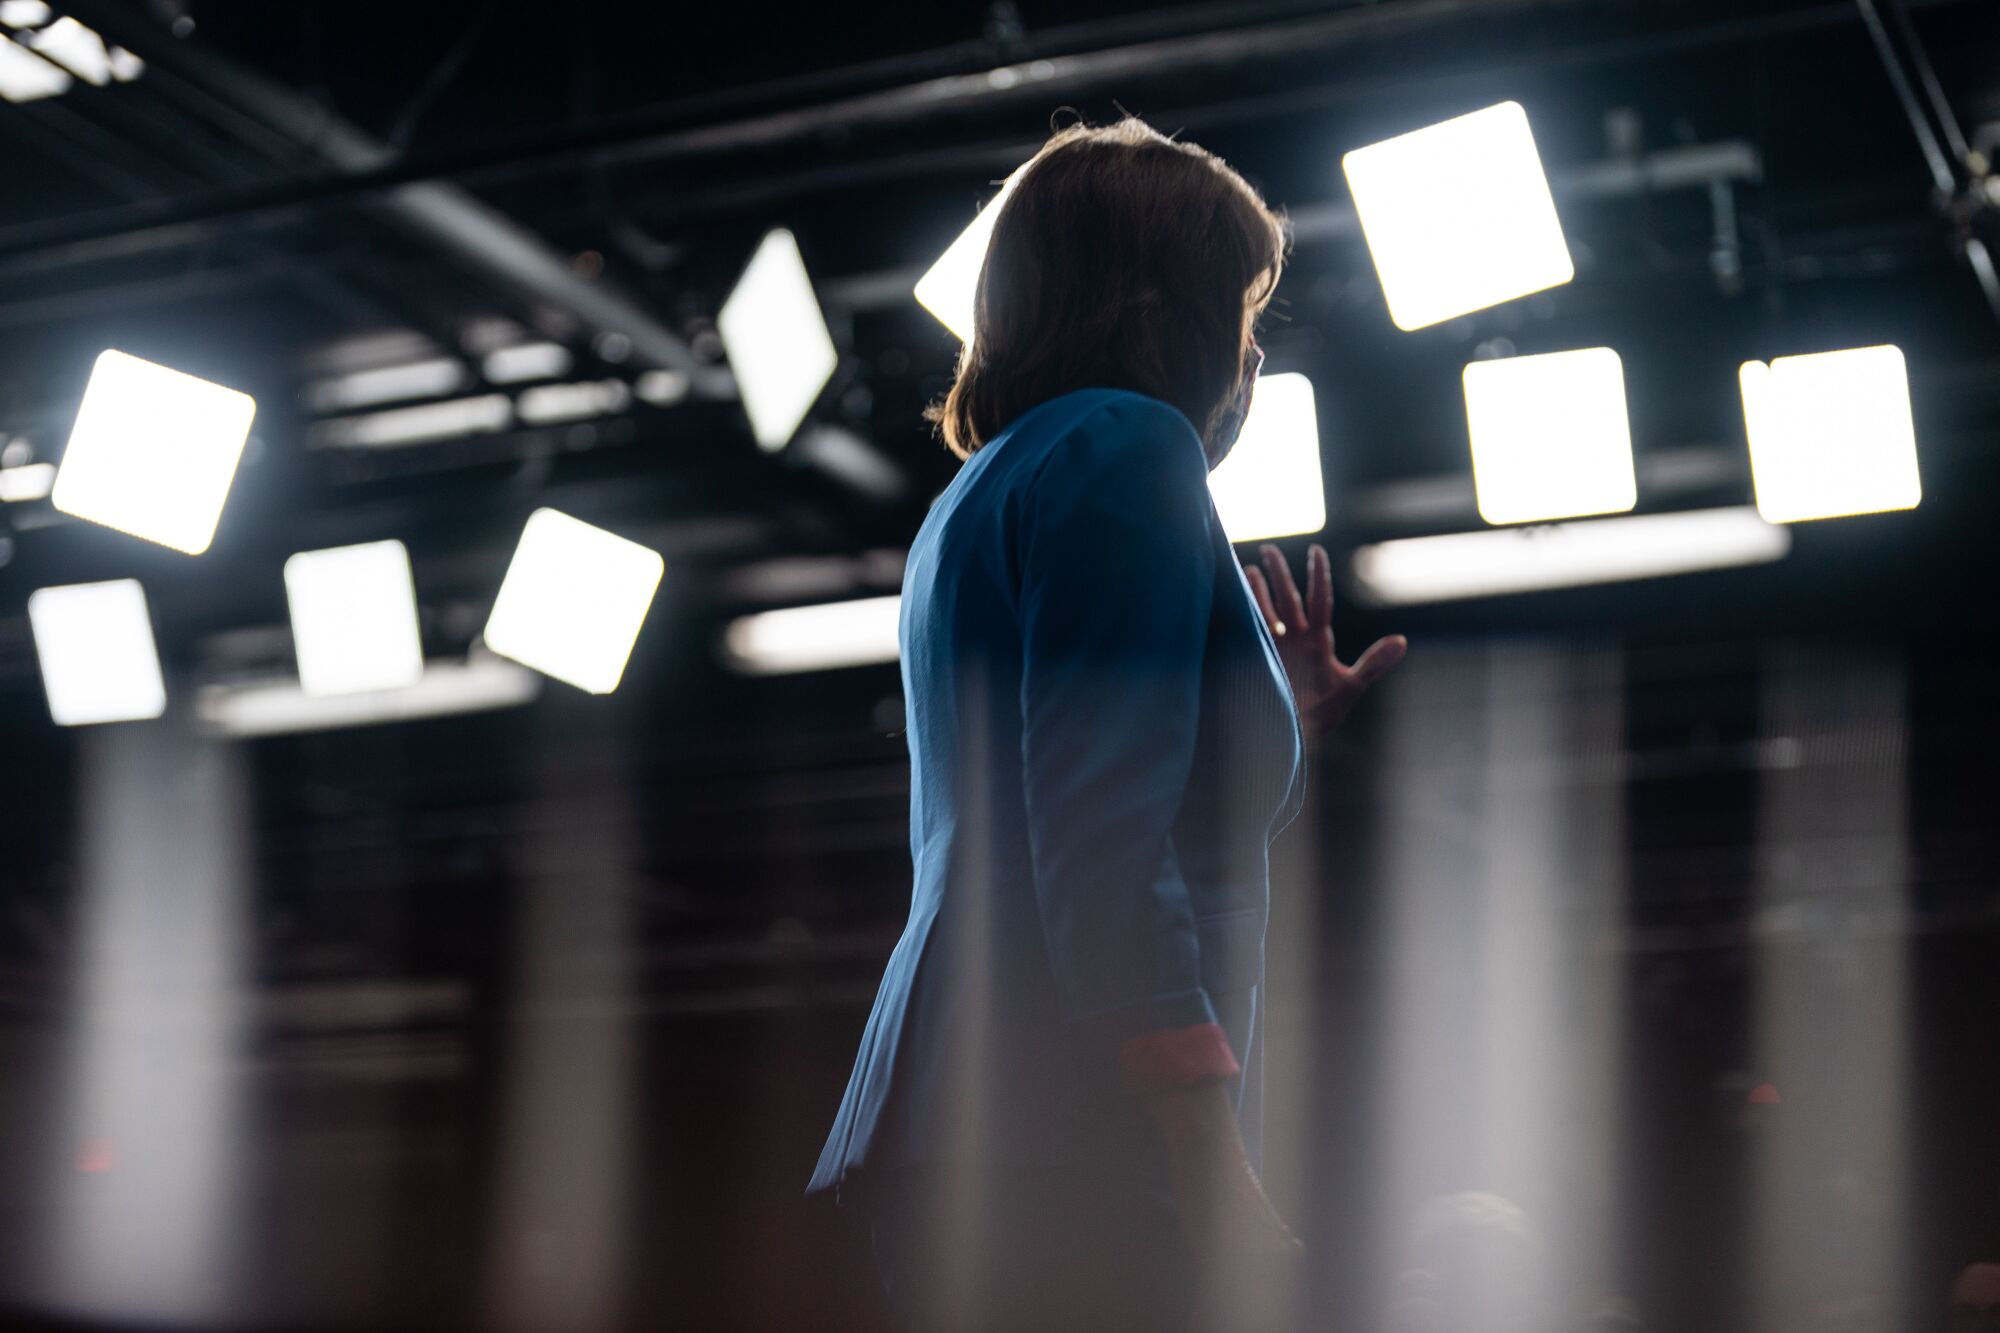 Nancy Pelosi is seen in silhouette in front of camera lights